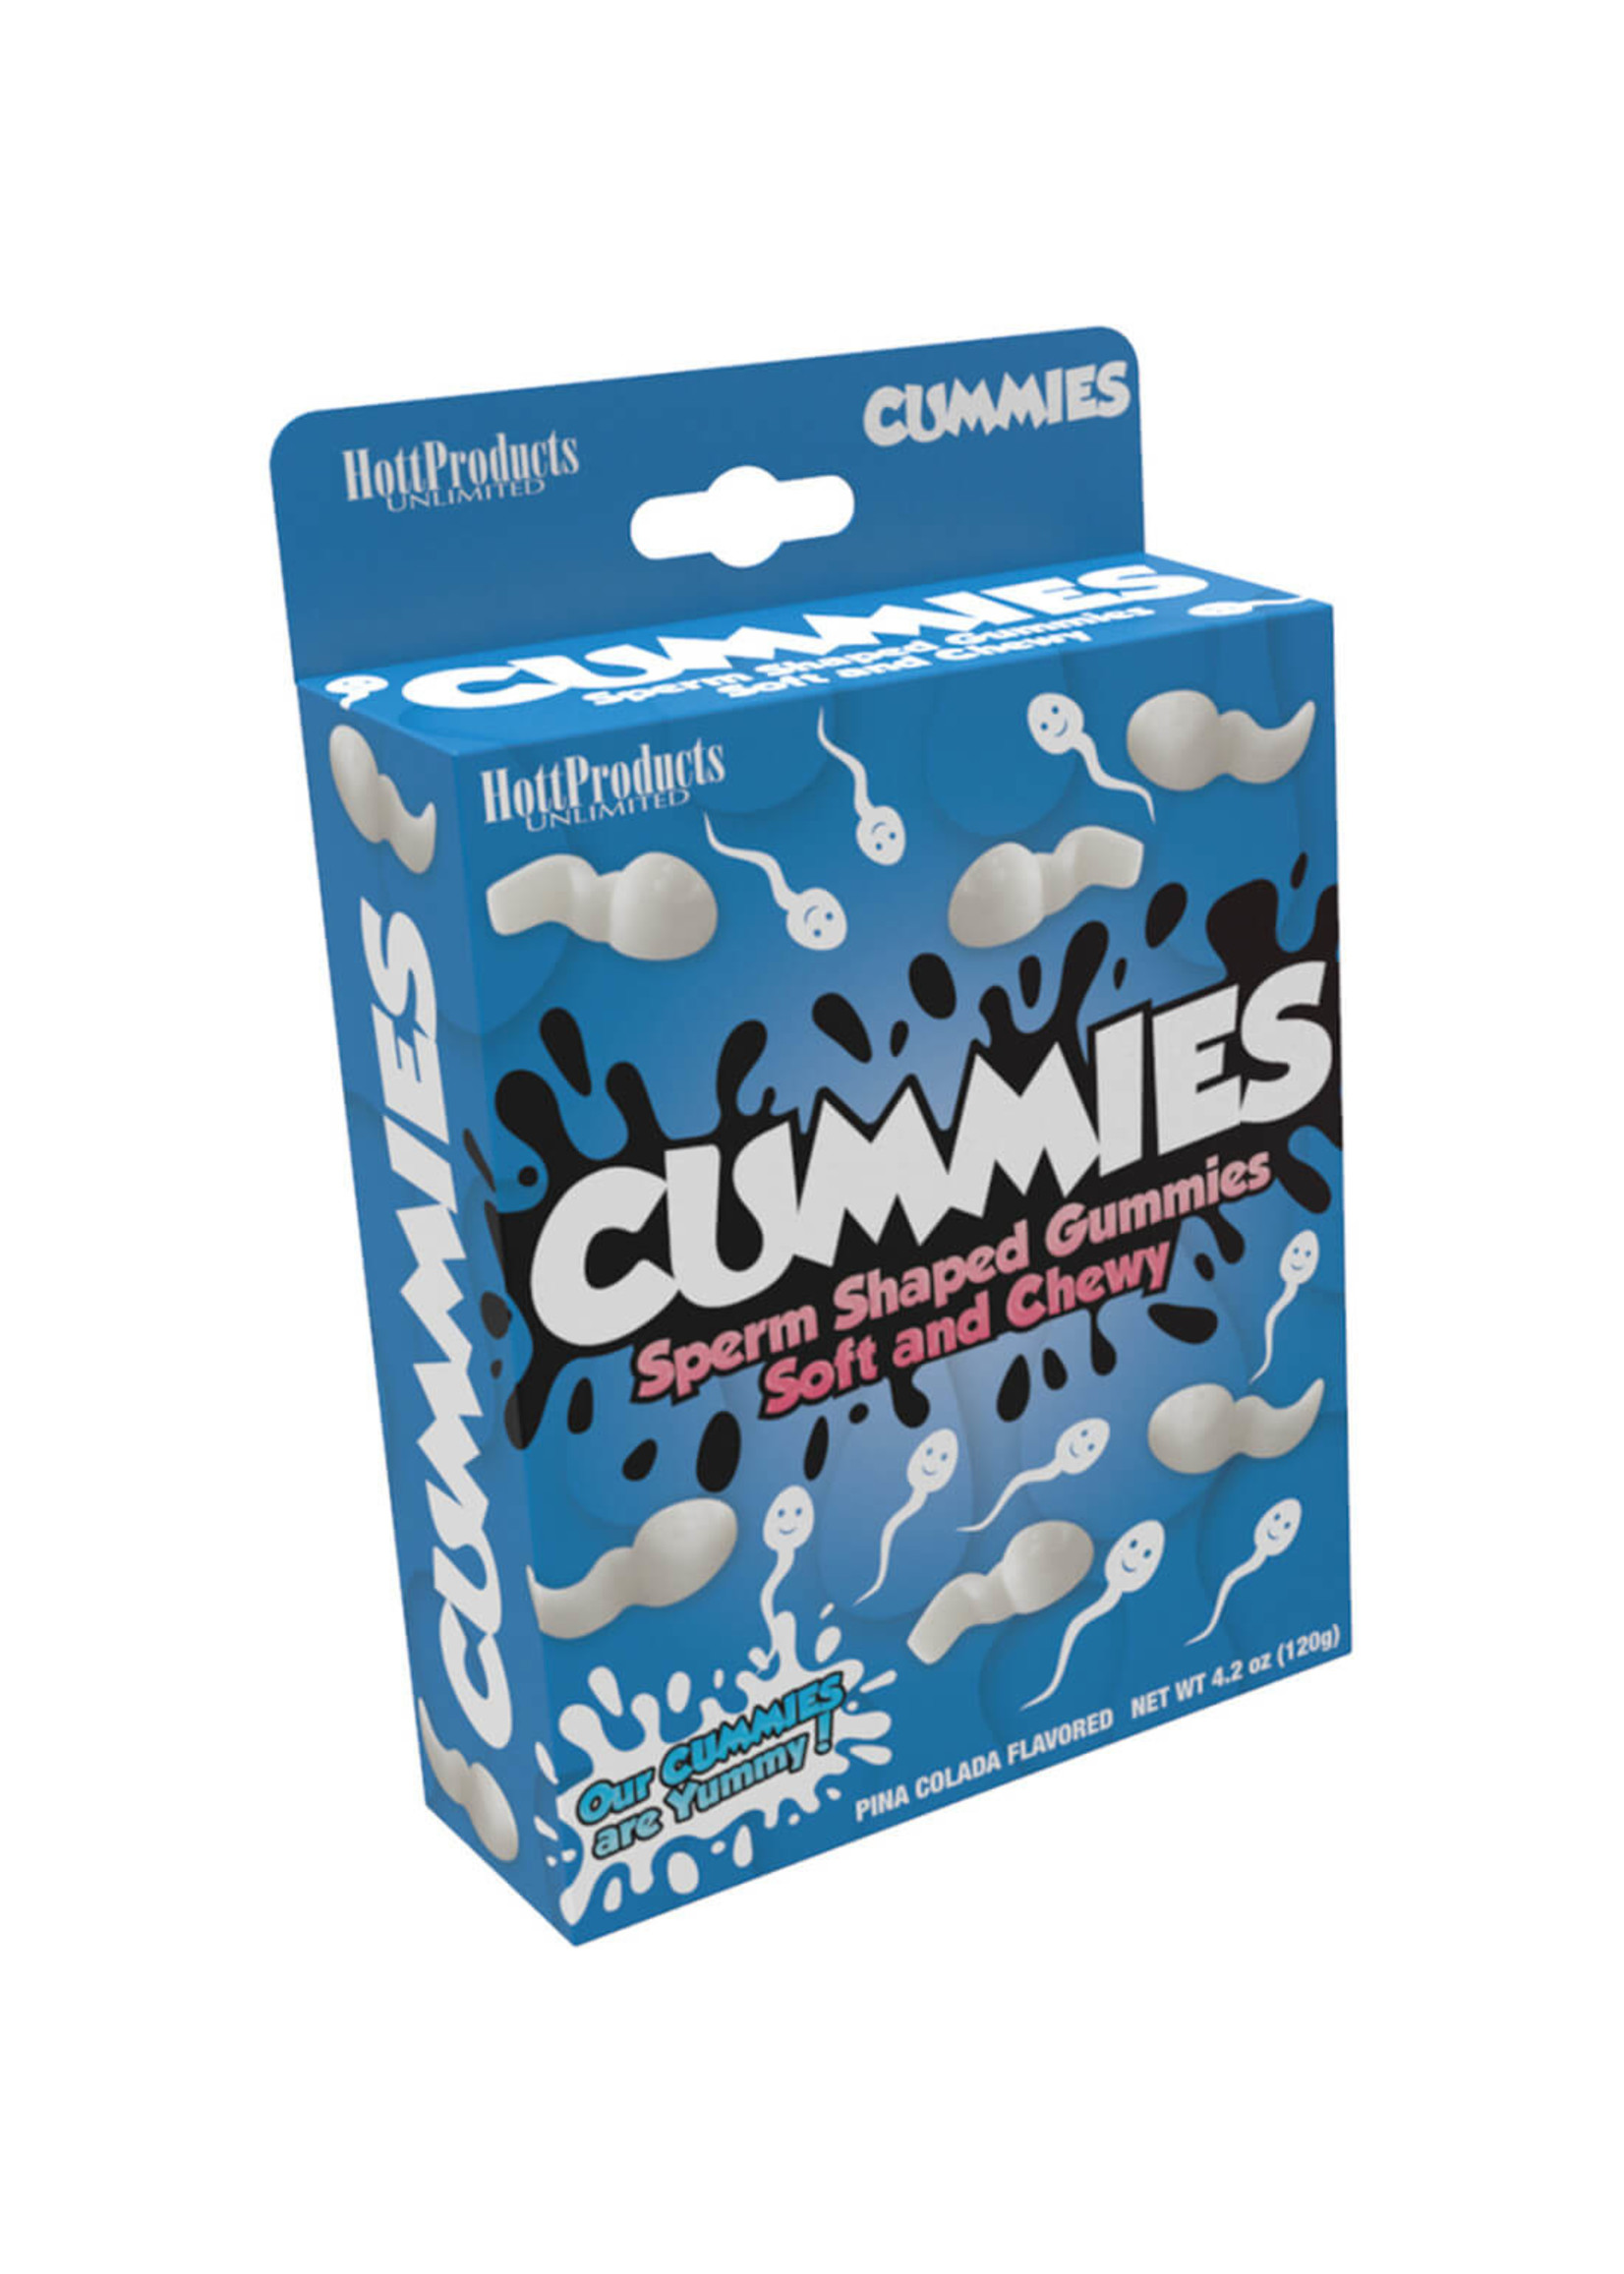 Cummies Sperm-Shaped Gummies